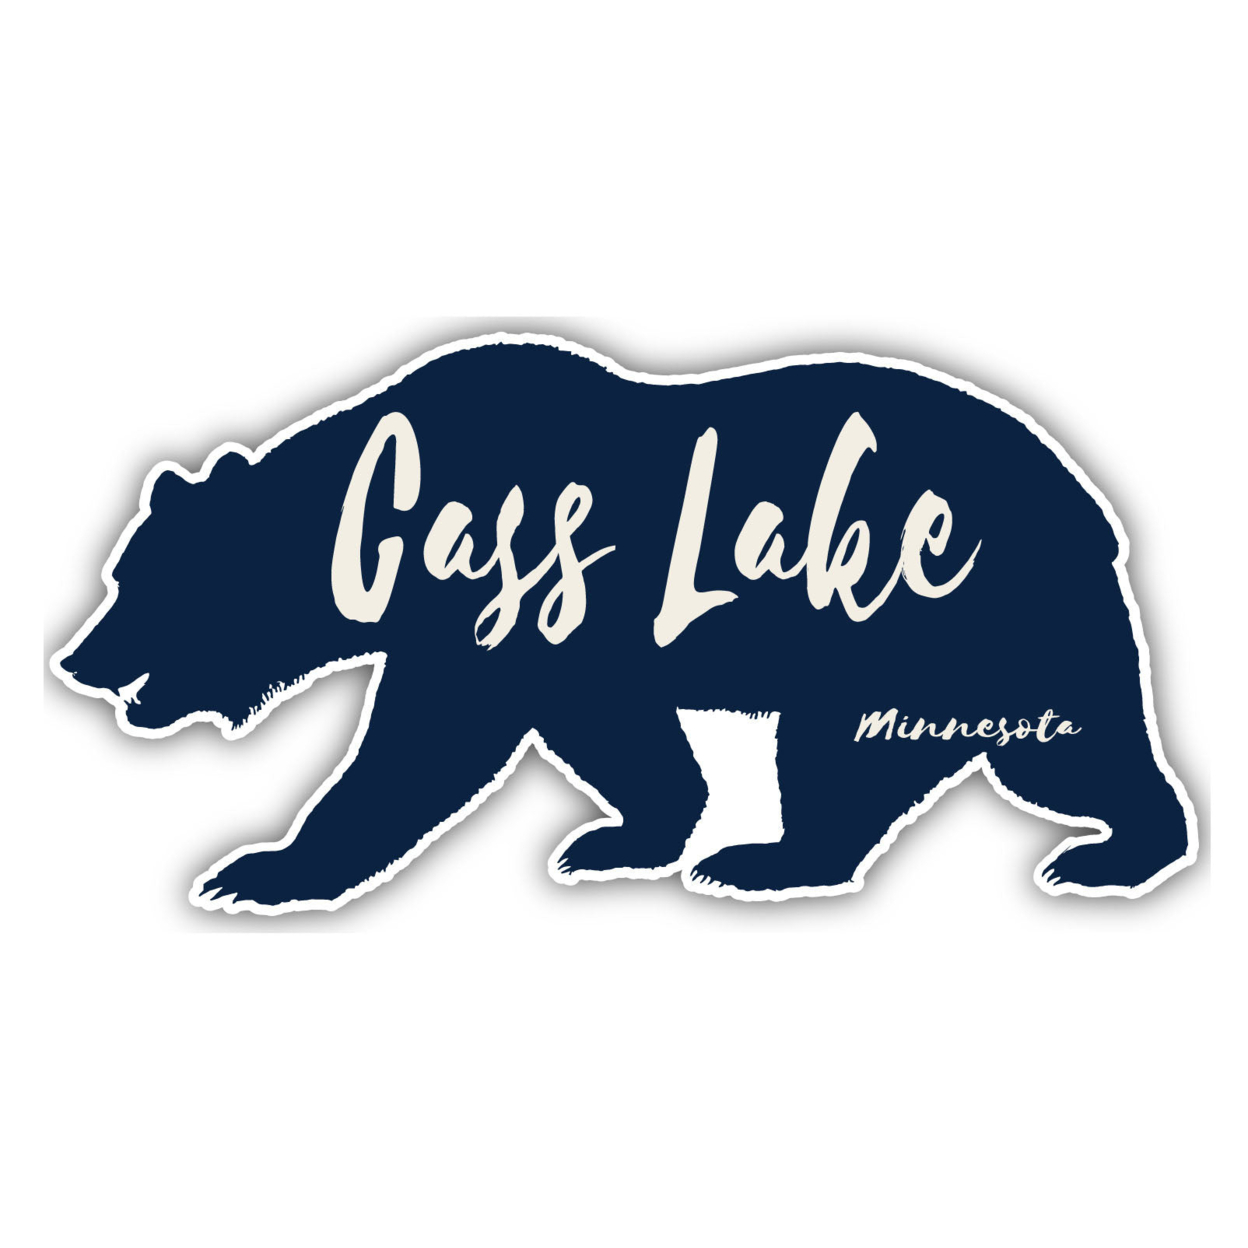 Cass Lake Minnesota Souvenir Decorative Stickers (Choose Theme And Size) - Single Unit, 4-Inch, Camp Life